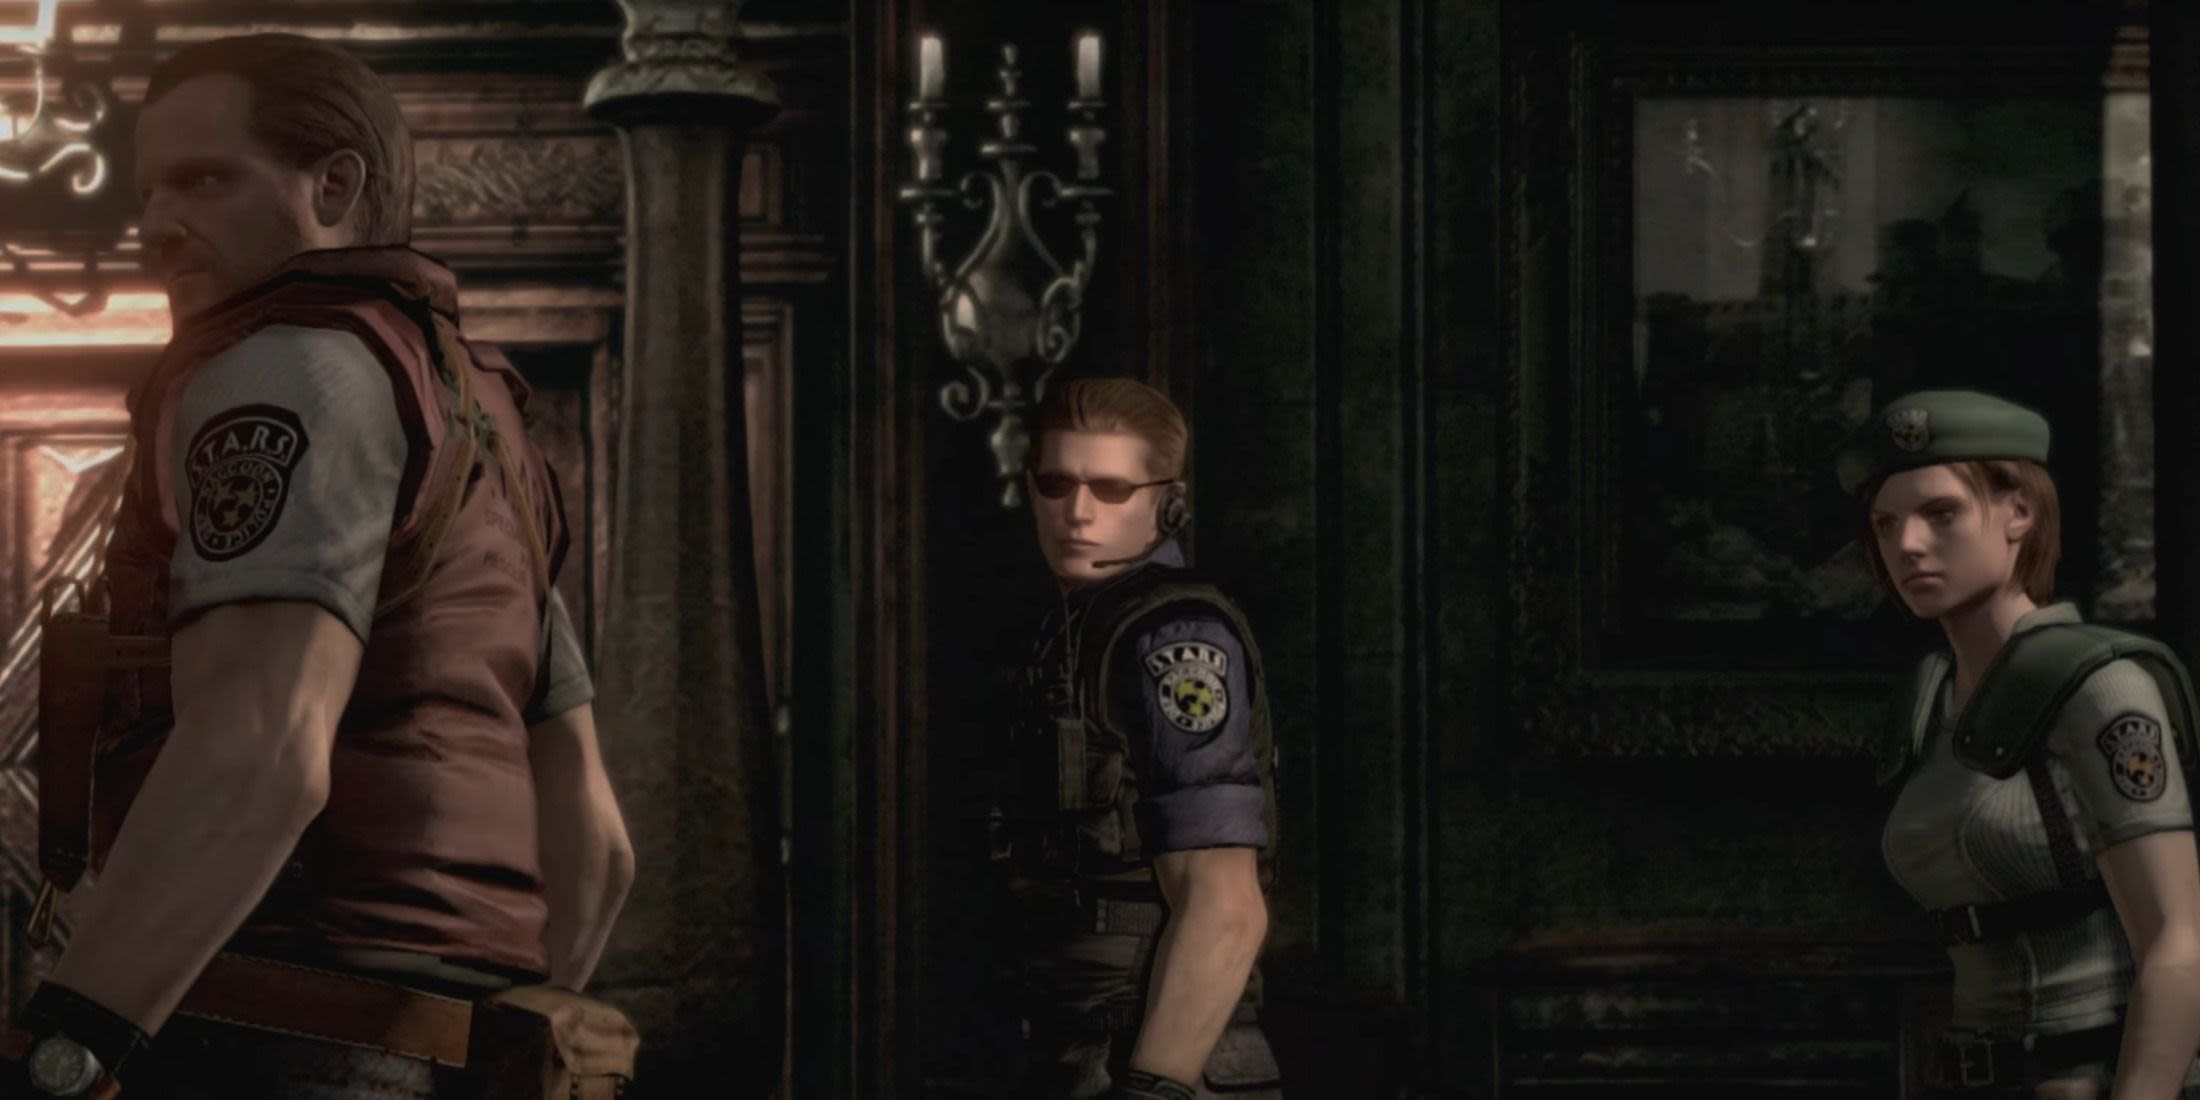 Rumor: Resident Evil Remake Leak Reveals Gameplay and Launch Platform Details